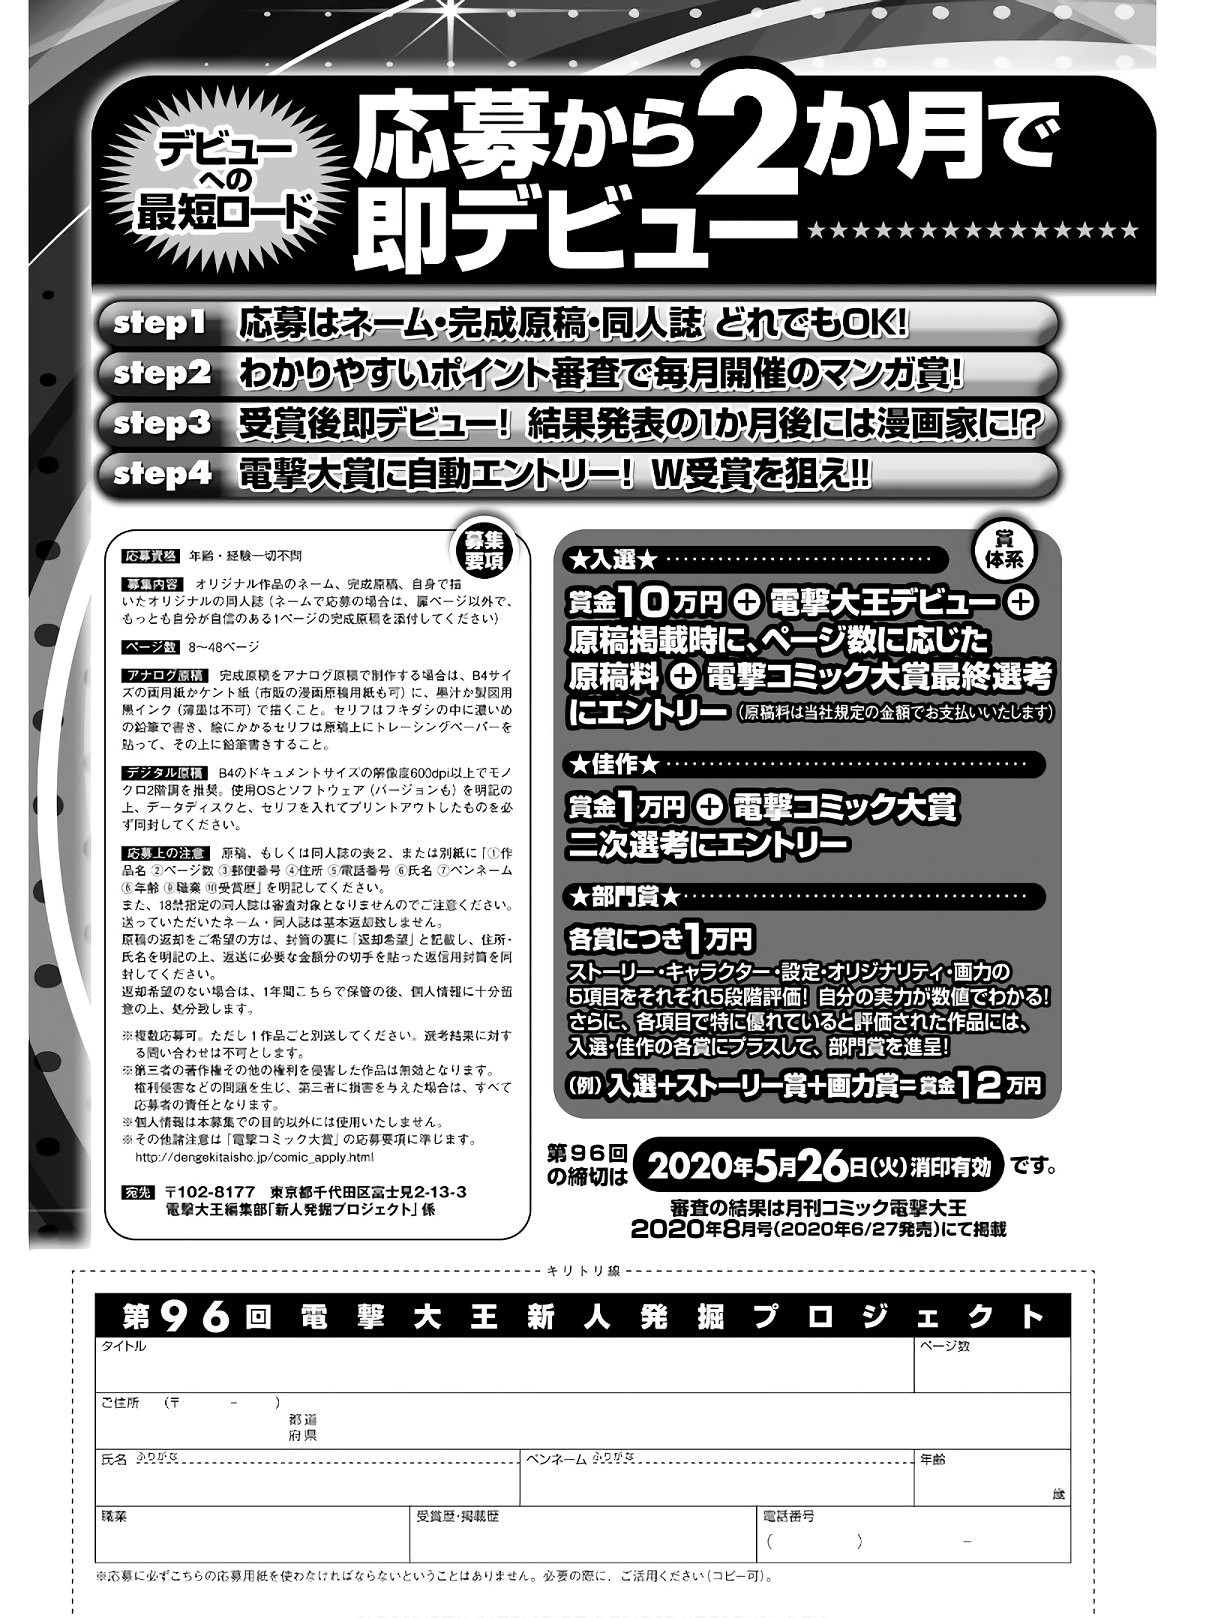 Dengeki Daioh - Chapter 2020-06 - Page 838